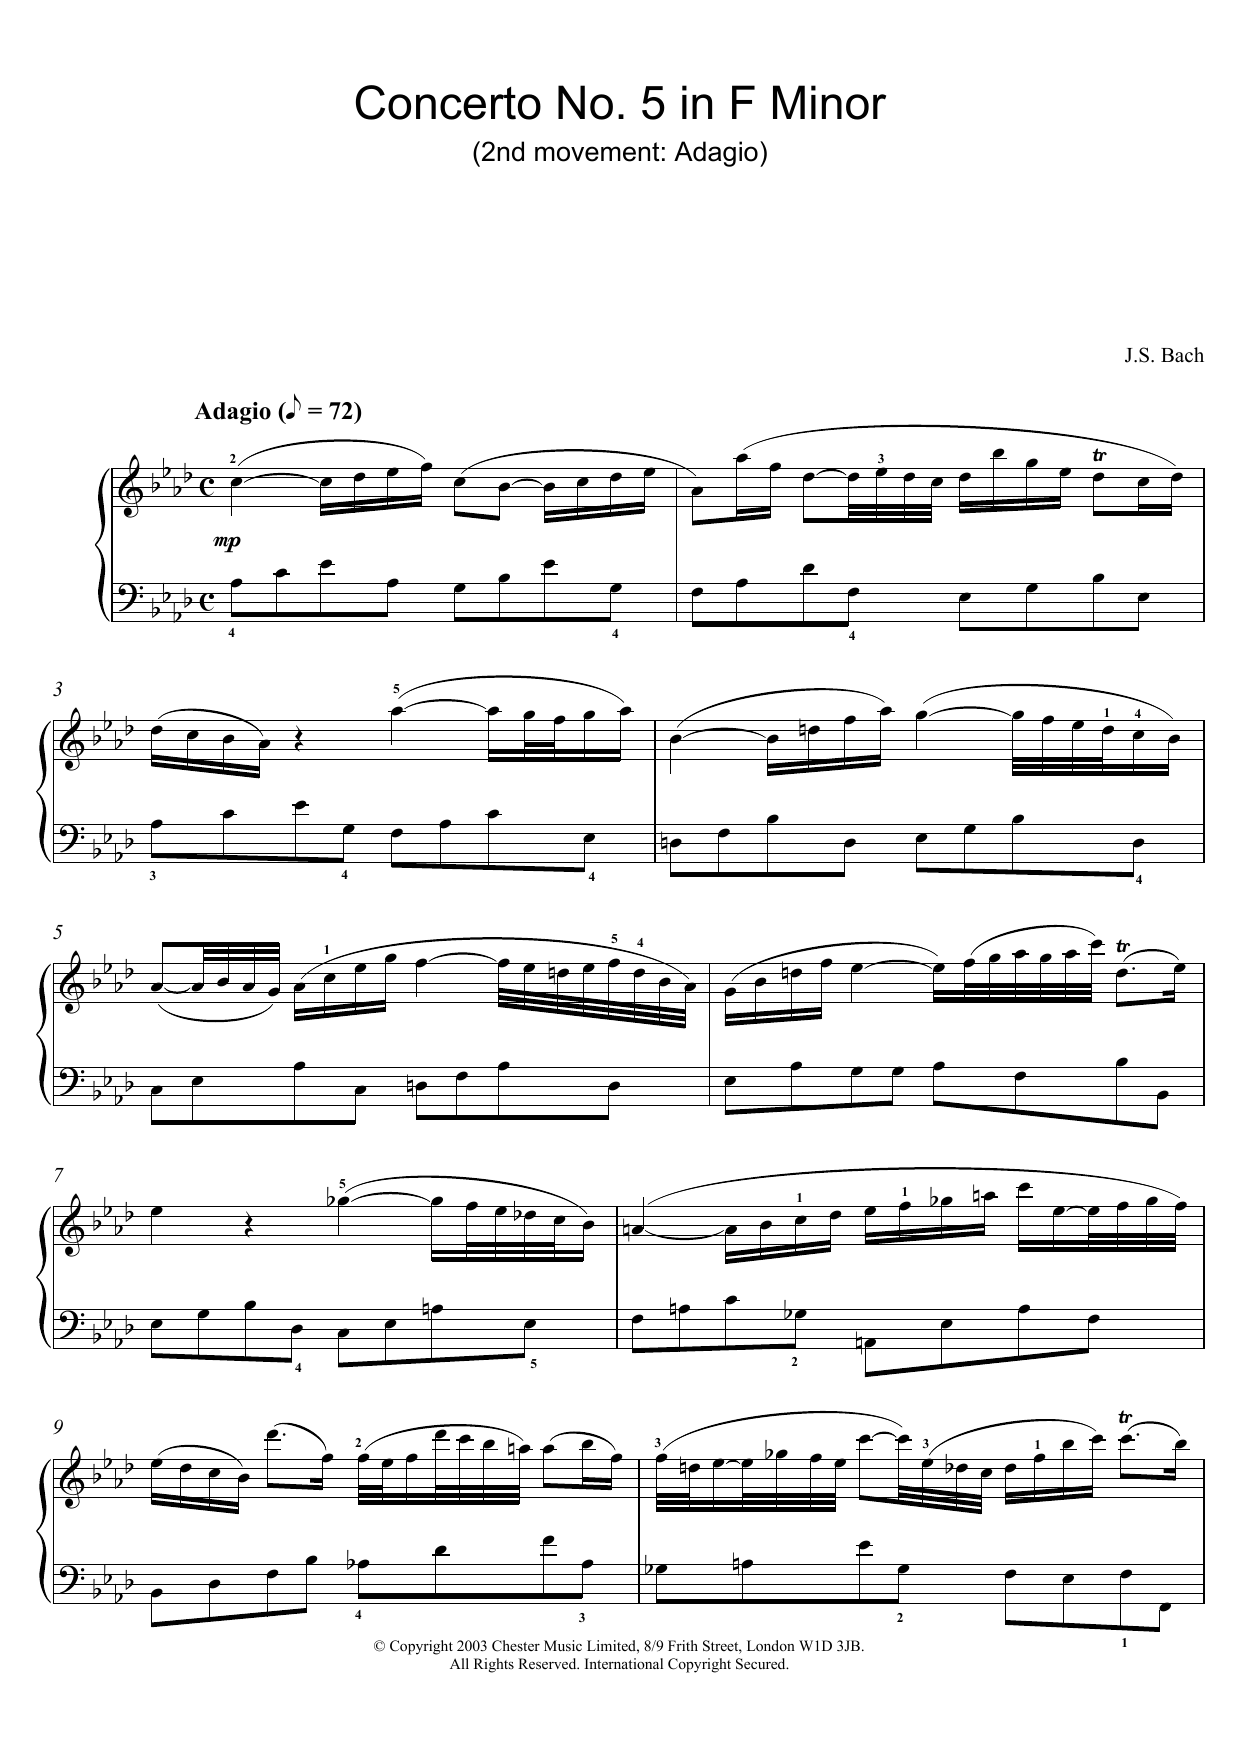 Johann Sebastian Bach Piano Concerto No. 5 in F Minor (2nd movement: Adagio) Sheet Music Notes & Chords for Piano - Download or Print PDF